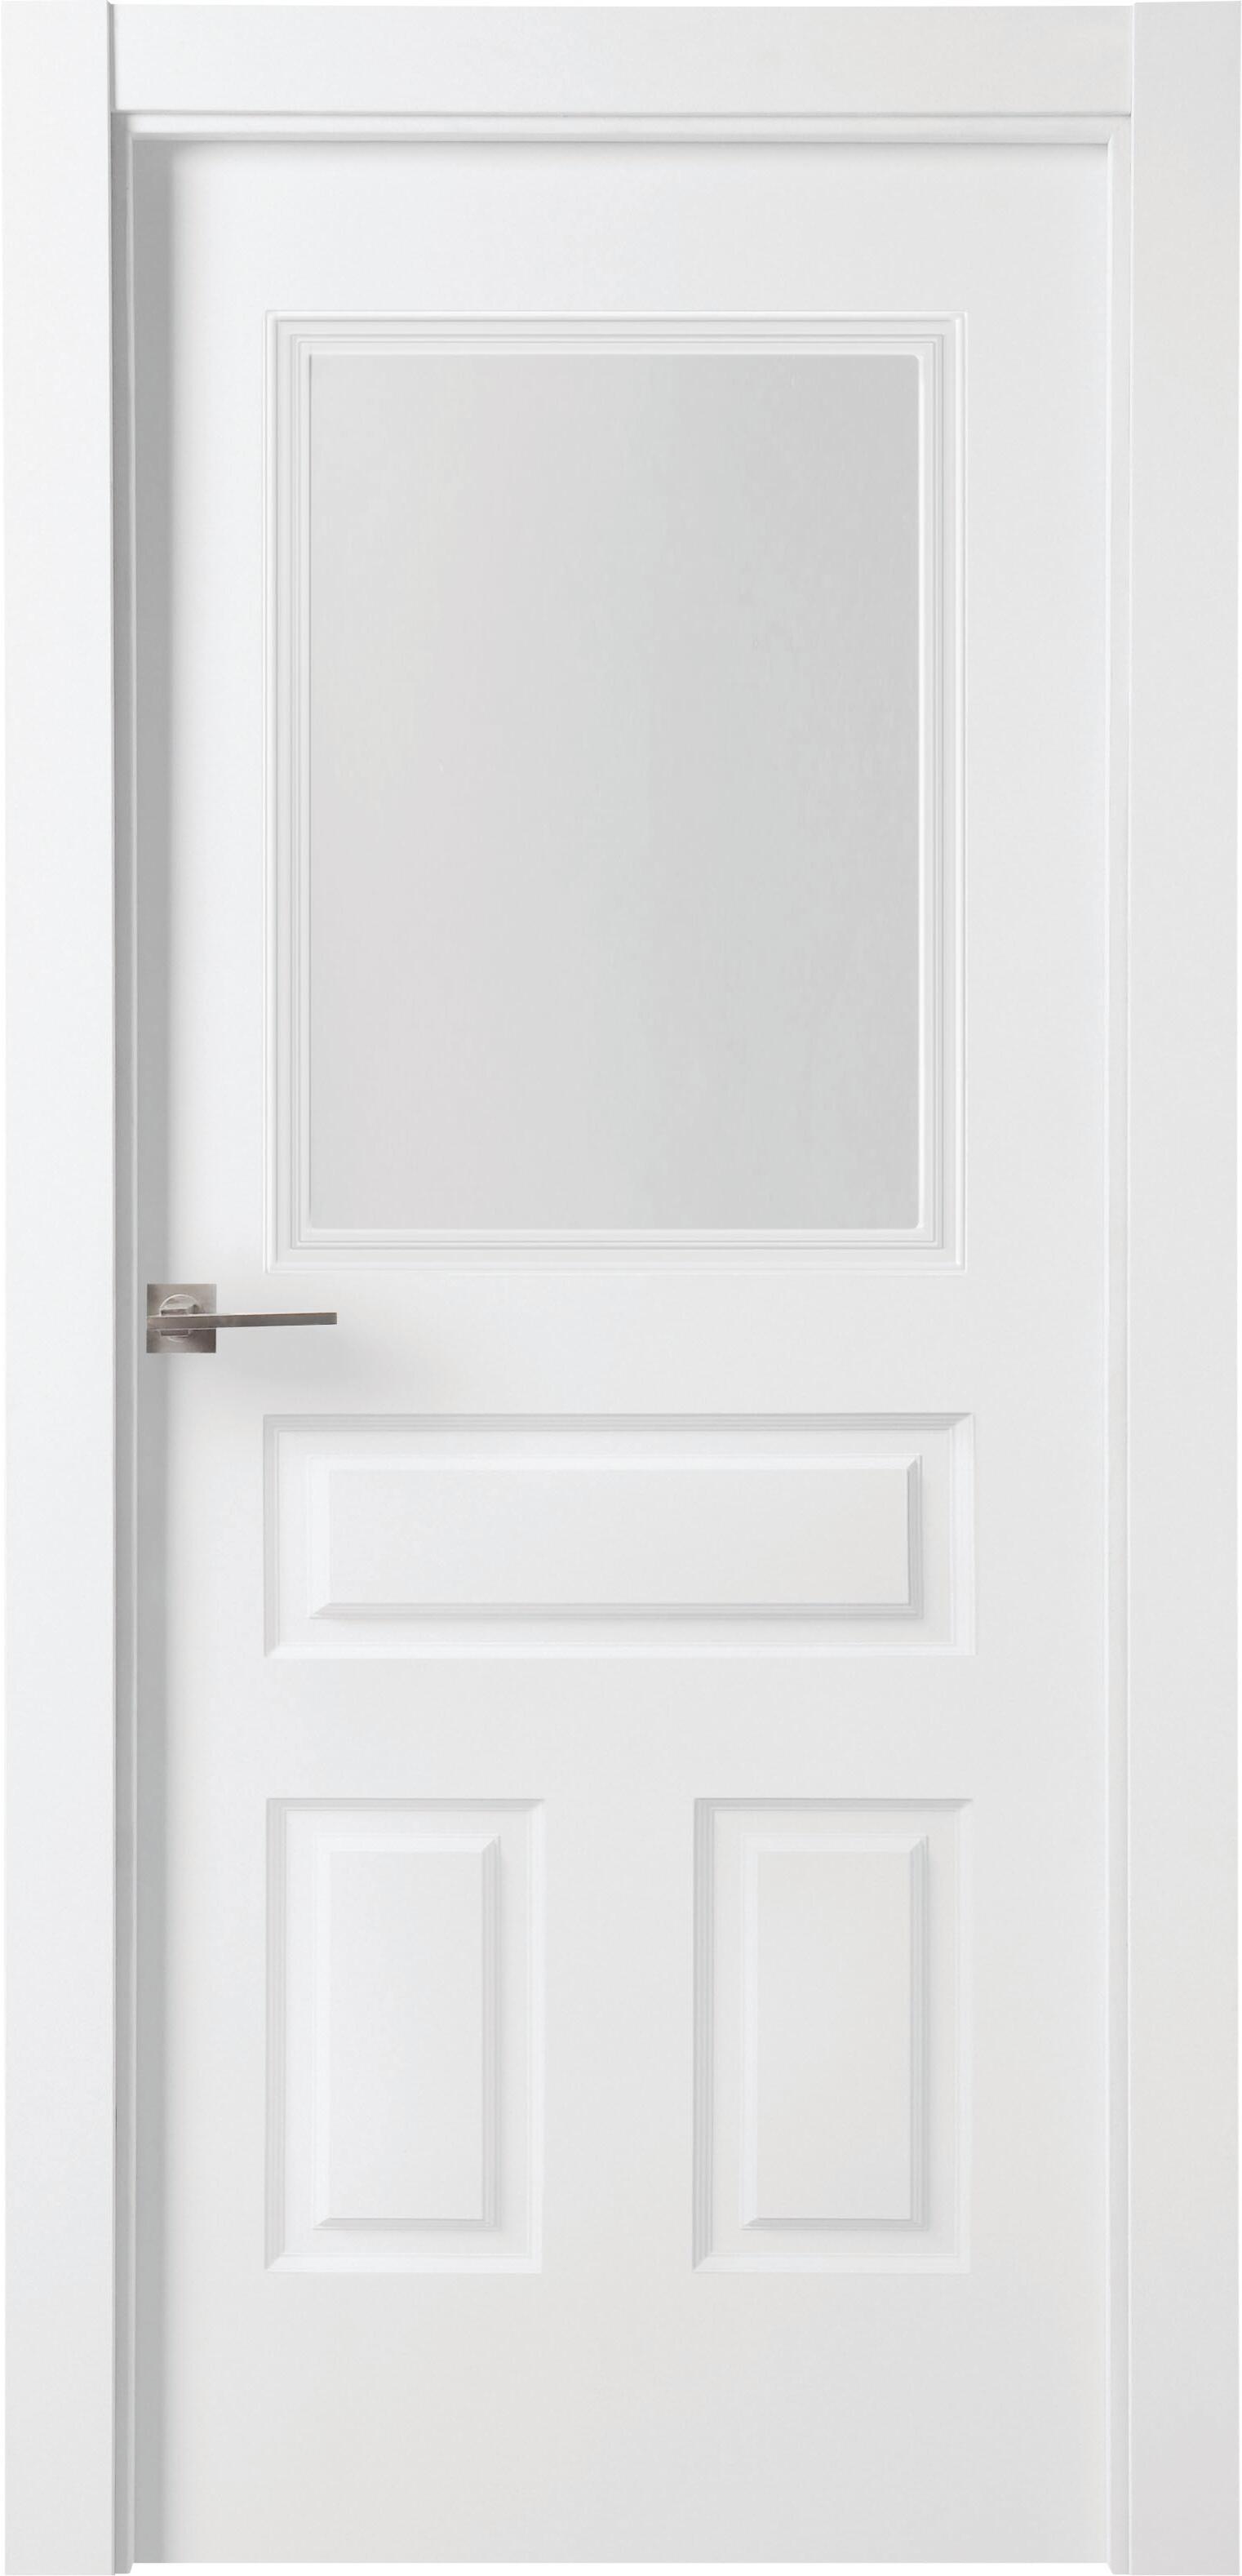 Puerta indiana plus blanco apertura derecha con cristal 11x72,5cm